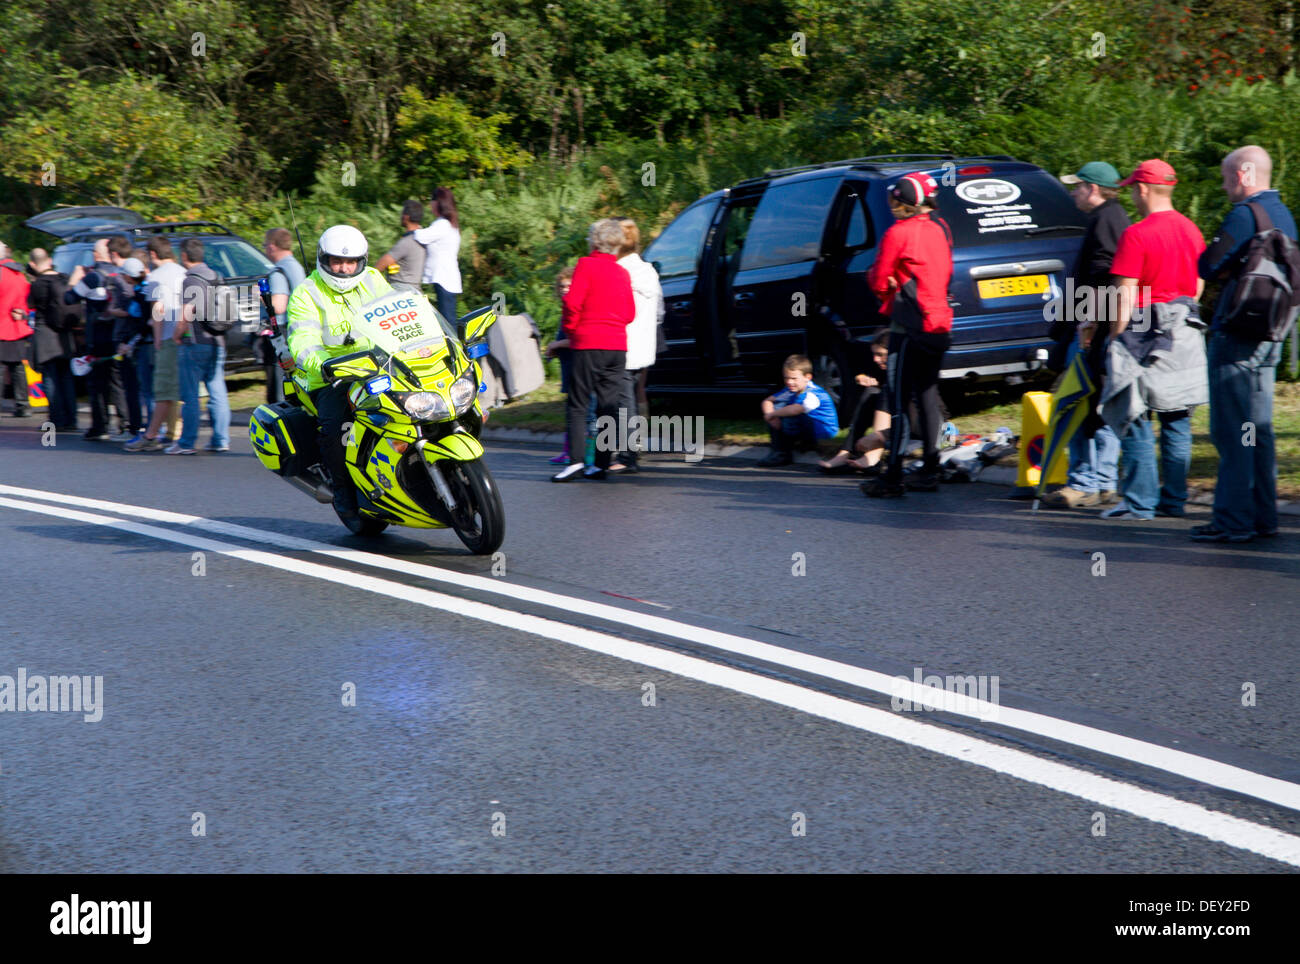 Polizei-Motorradfahrer, Tour of Britain Zyklus Rennen 2013, Caerphilly Mountain, Wales. Stockfoto